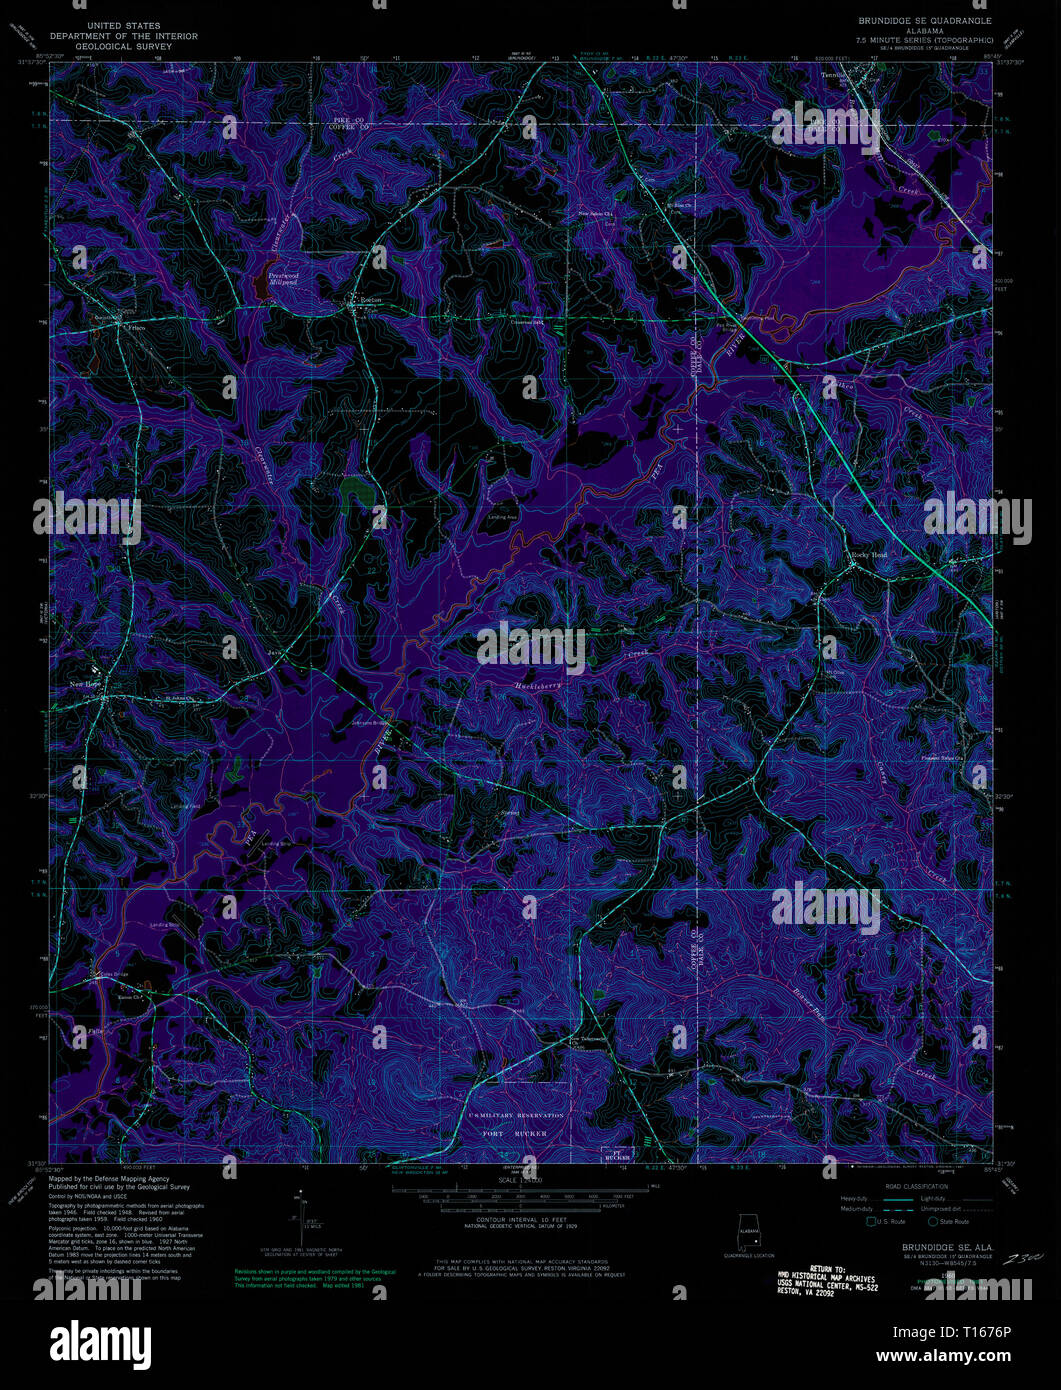 USGS TOPO Map Alabama AL Brundidge SE 303366 1960 24000 Inverted Stock Photo